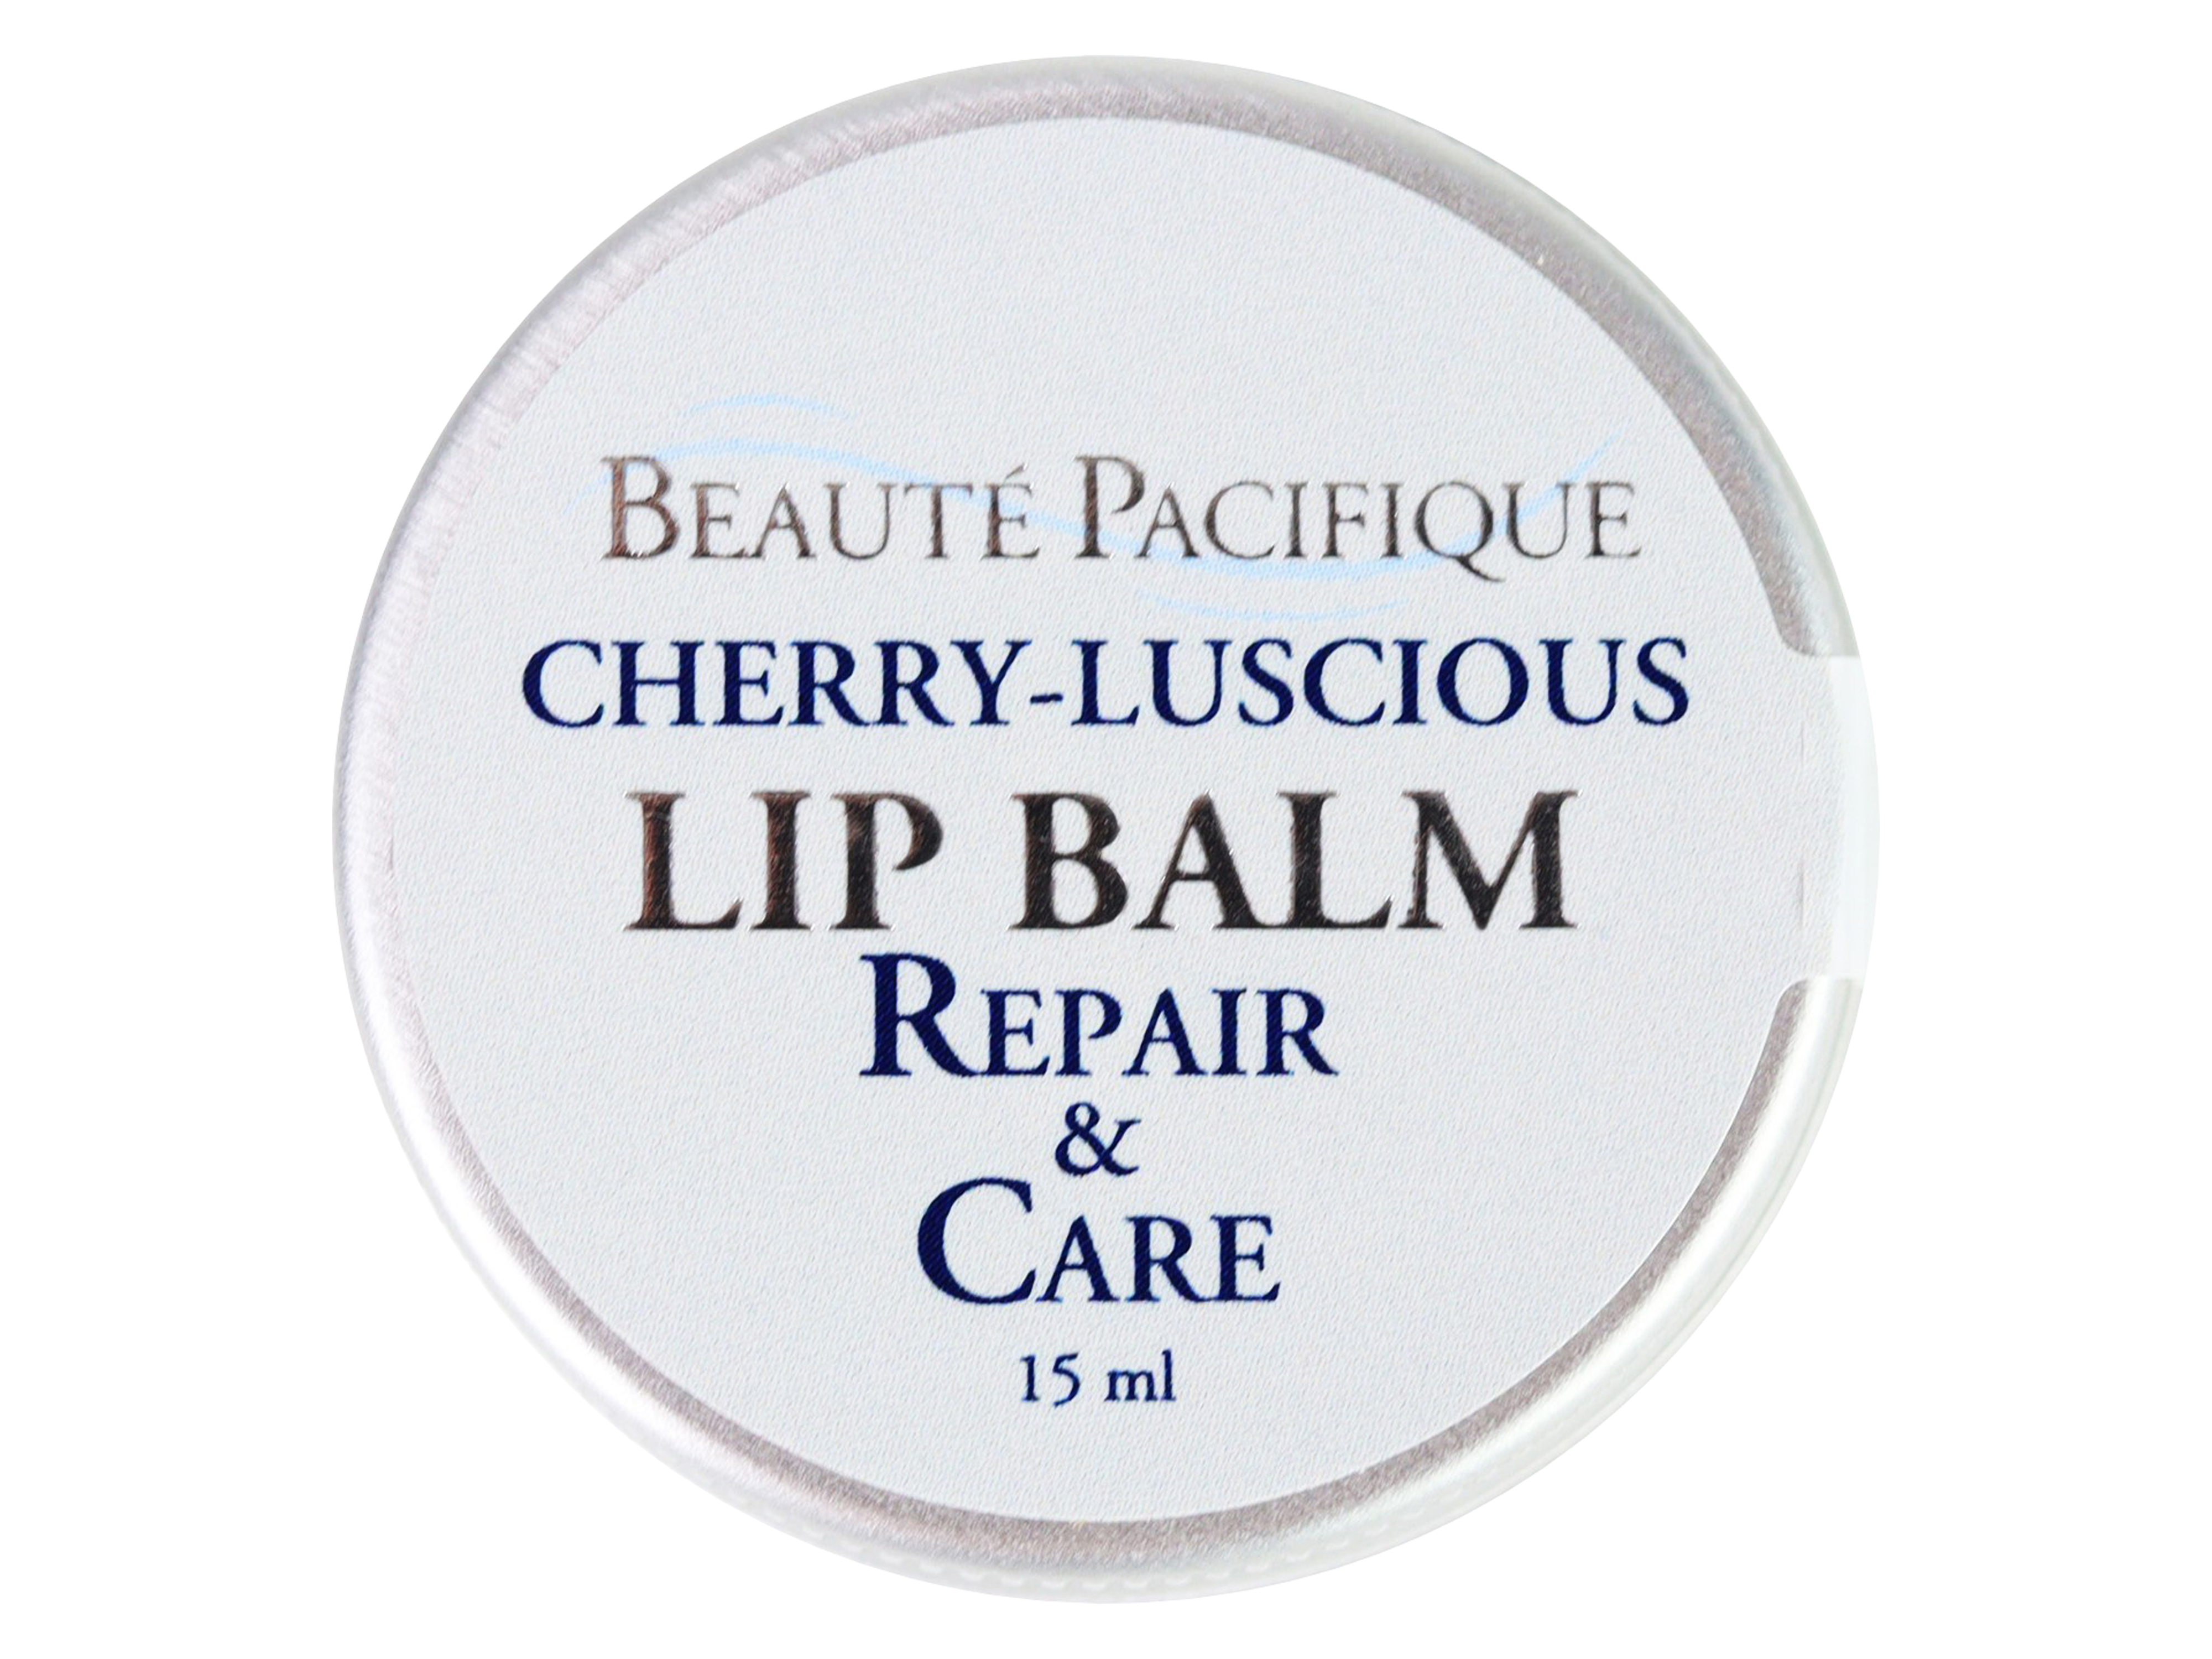 Beauté Pacifique Cherry-Luscious Lip Balm Repair & Care, 15 ml